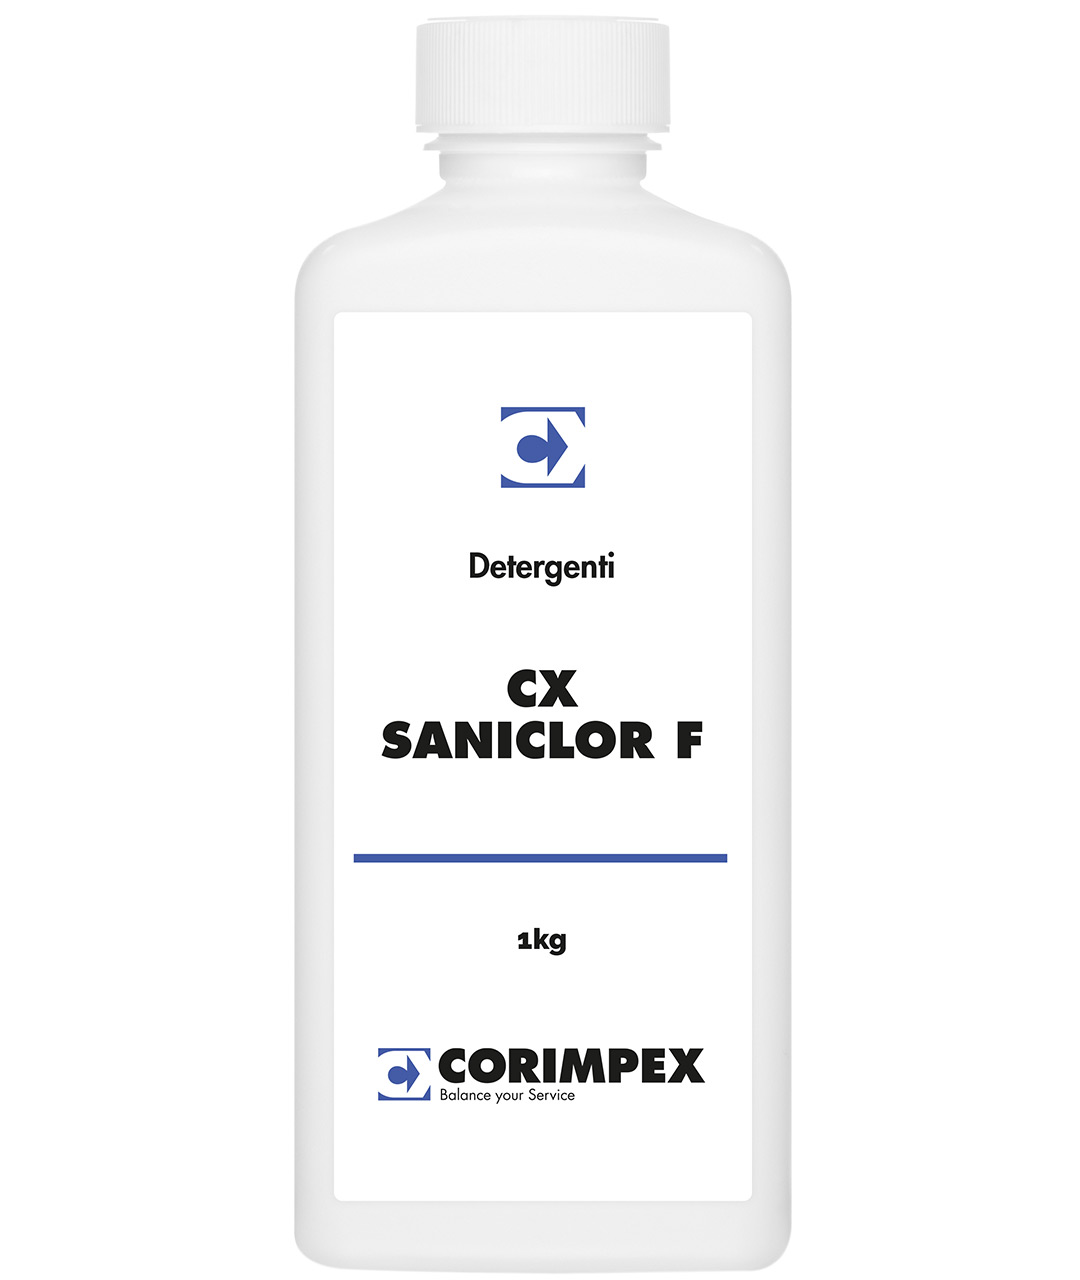 CX SANICLOR F